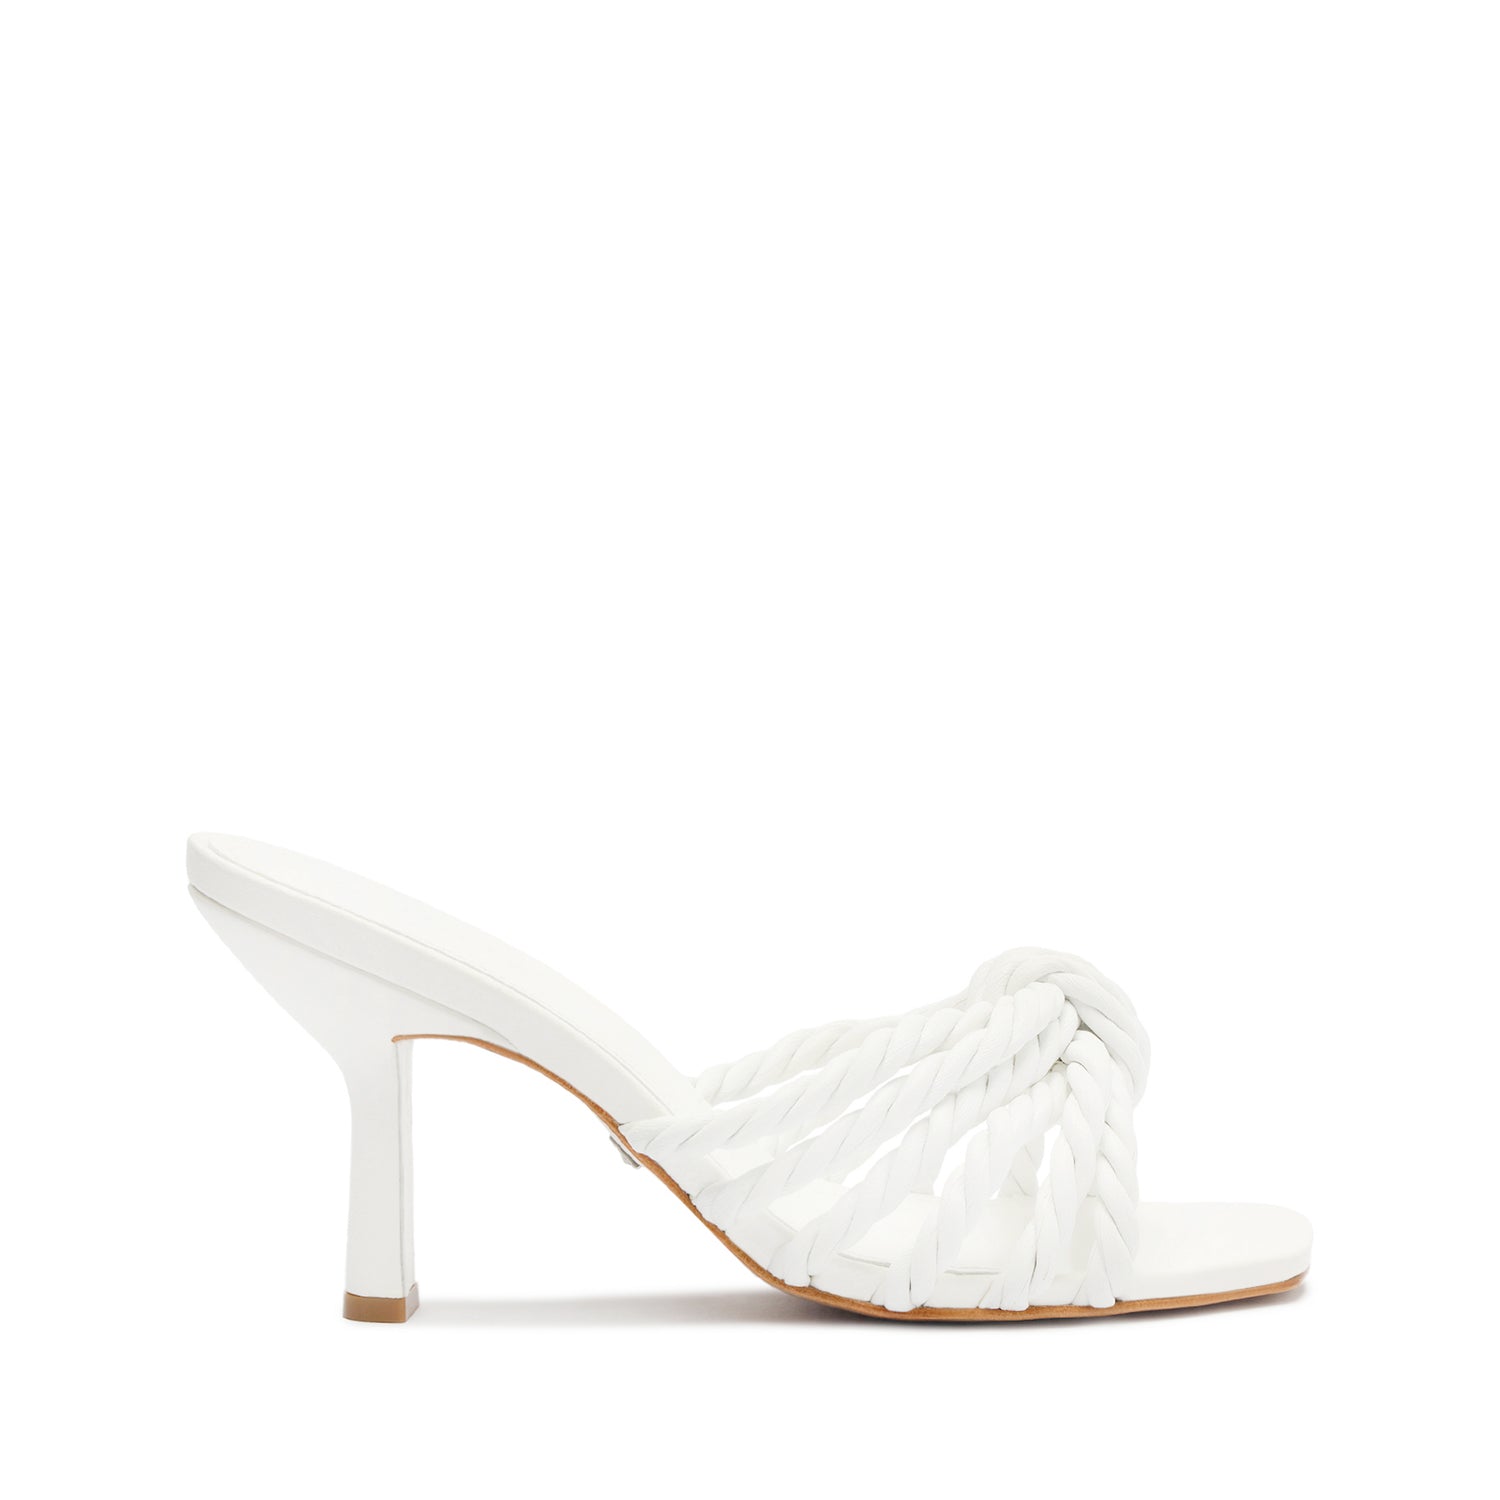 Capri Sandal Sandals High Summer 24 5 White Leather - Schutz Shoes